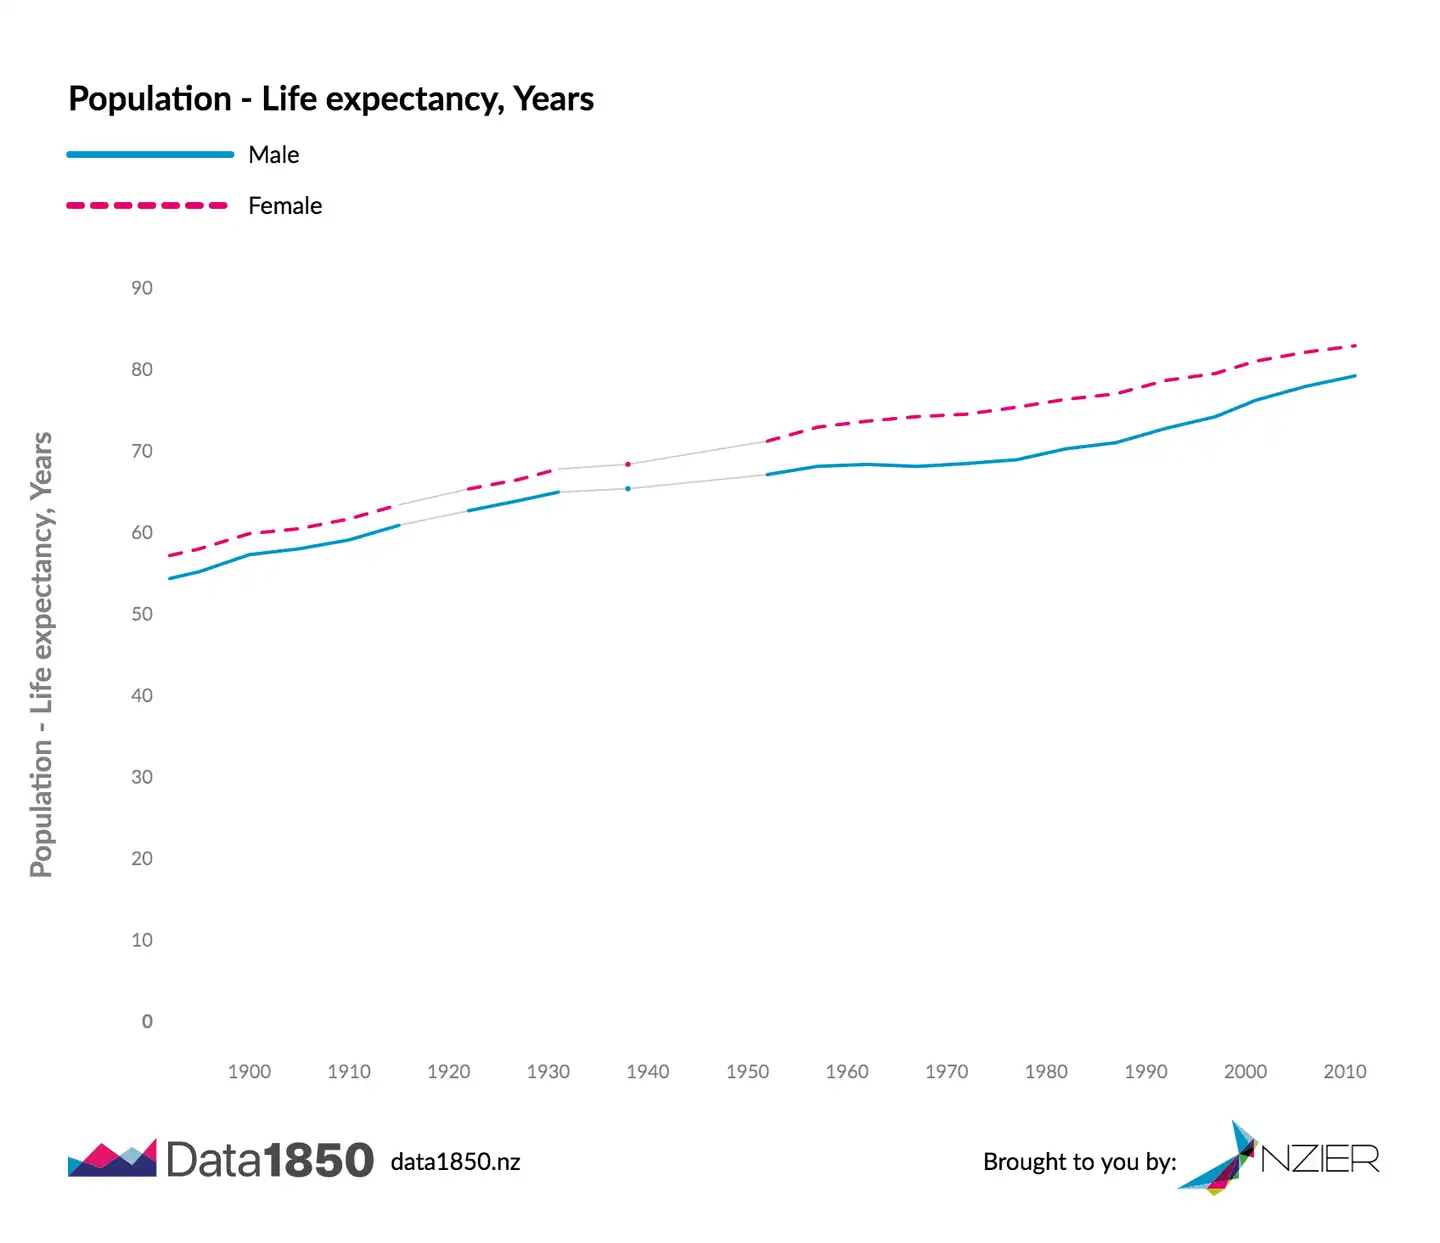 Life expectancy in NZ - NZIER Data1850